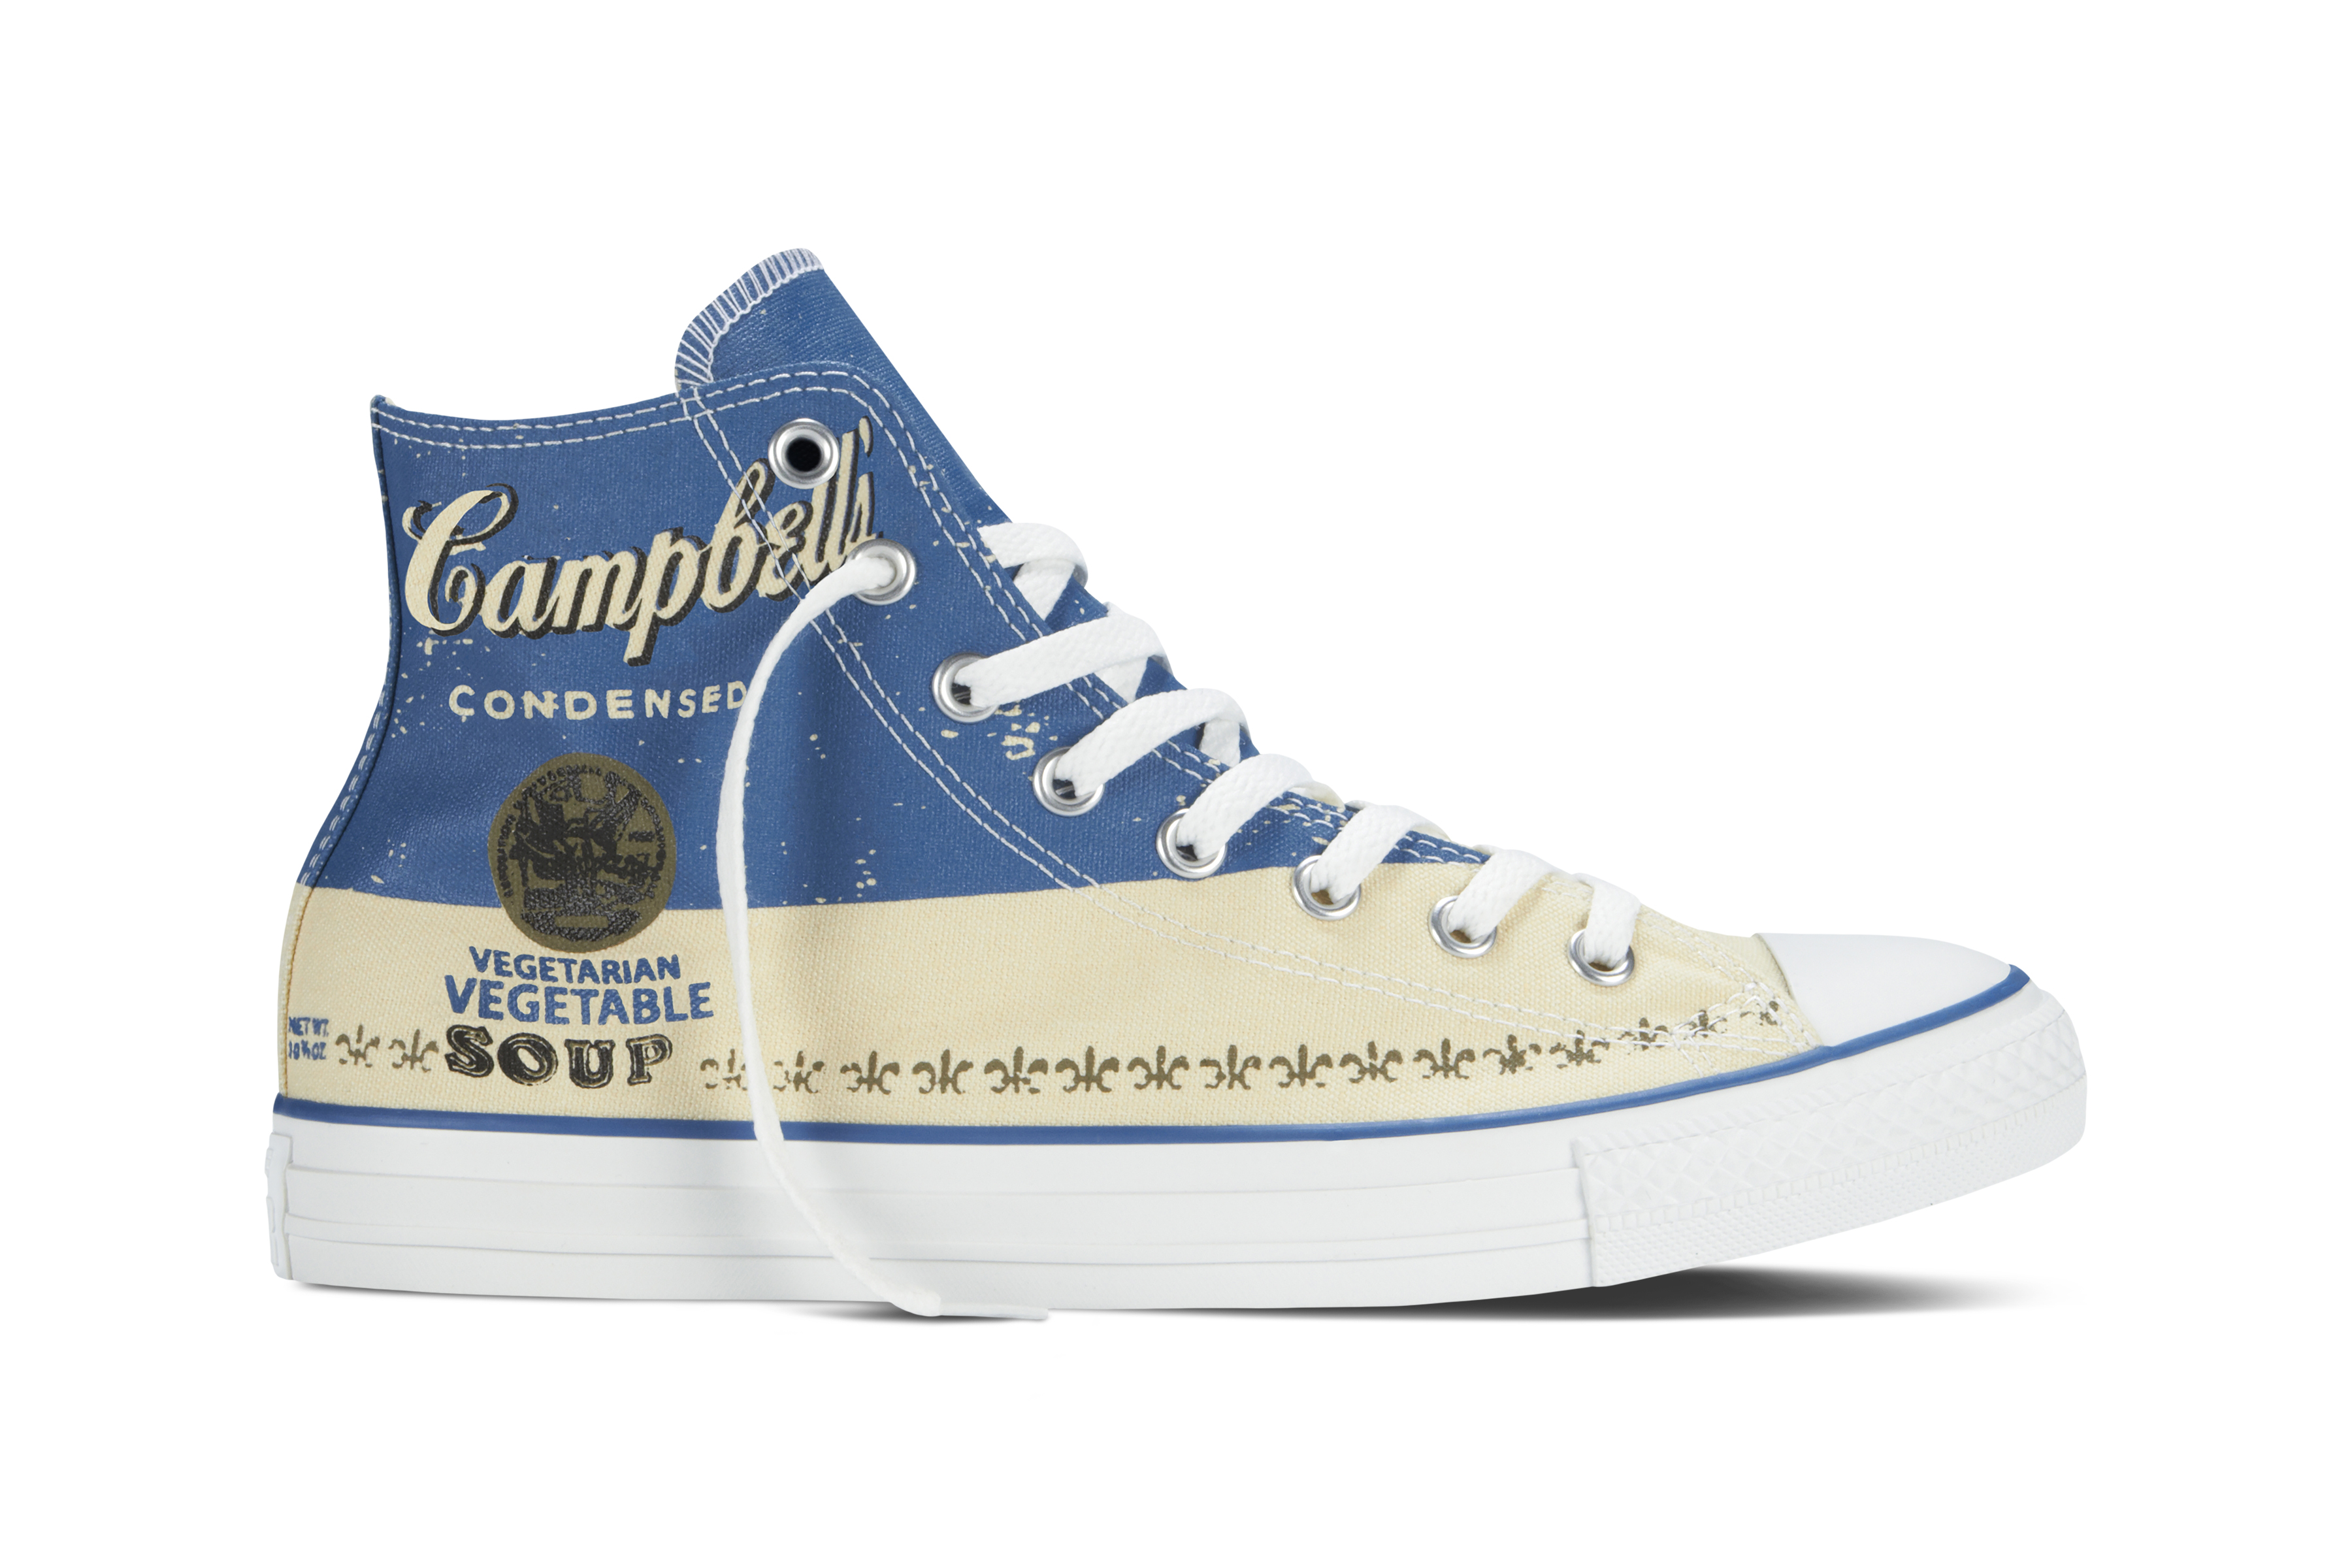 Converse All Stars Releases Warhol-Inspired Kicks